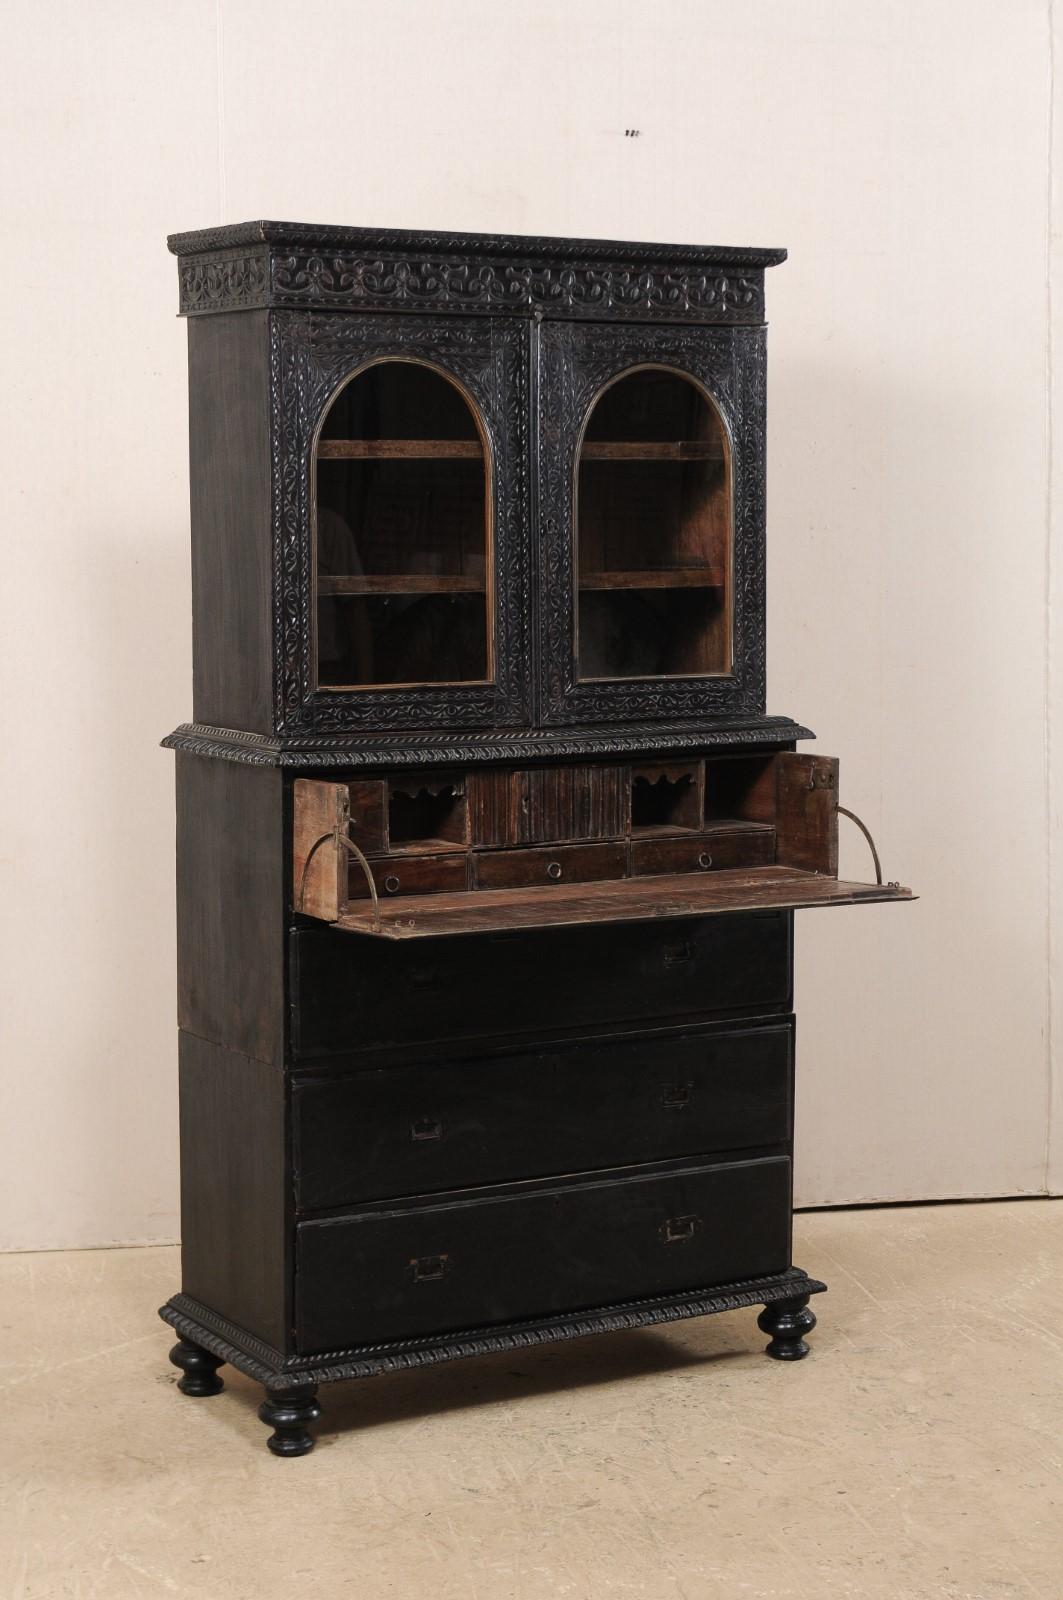 Indian Fabulous Antique British Colonial Butler's Desk 'With Secret Compartments'